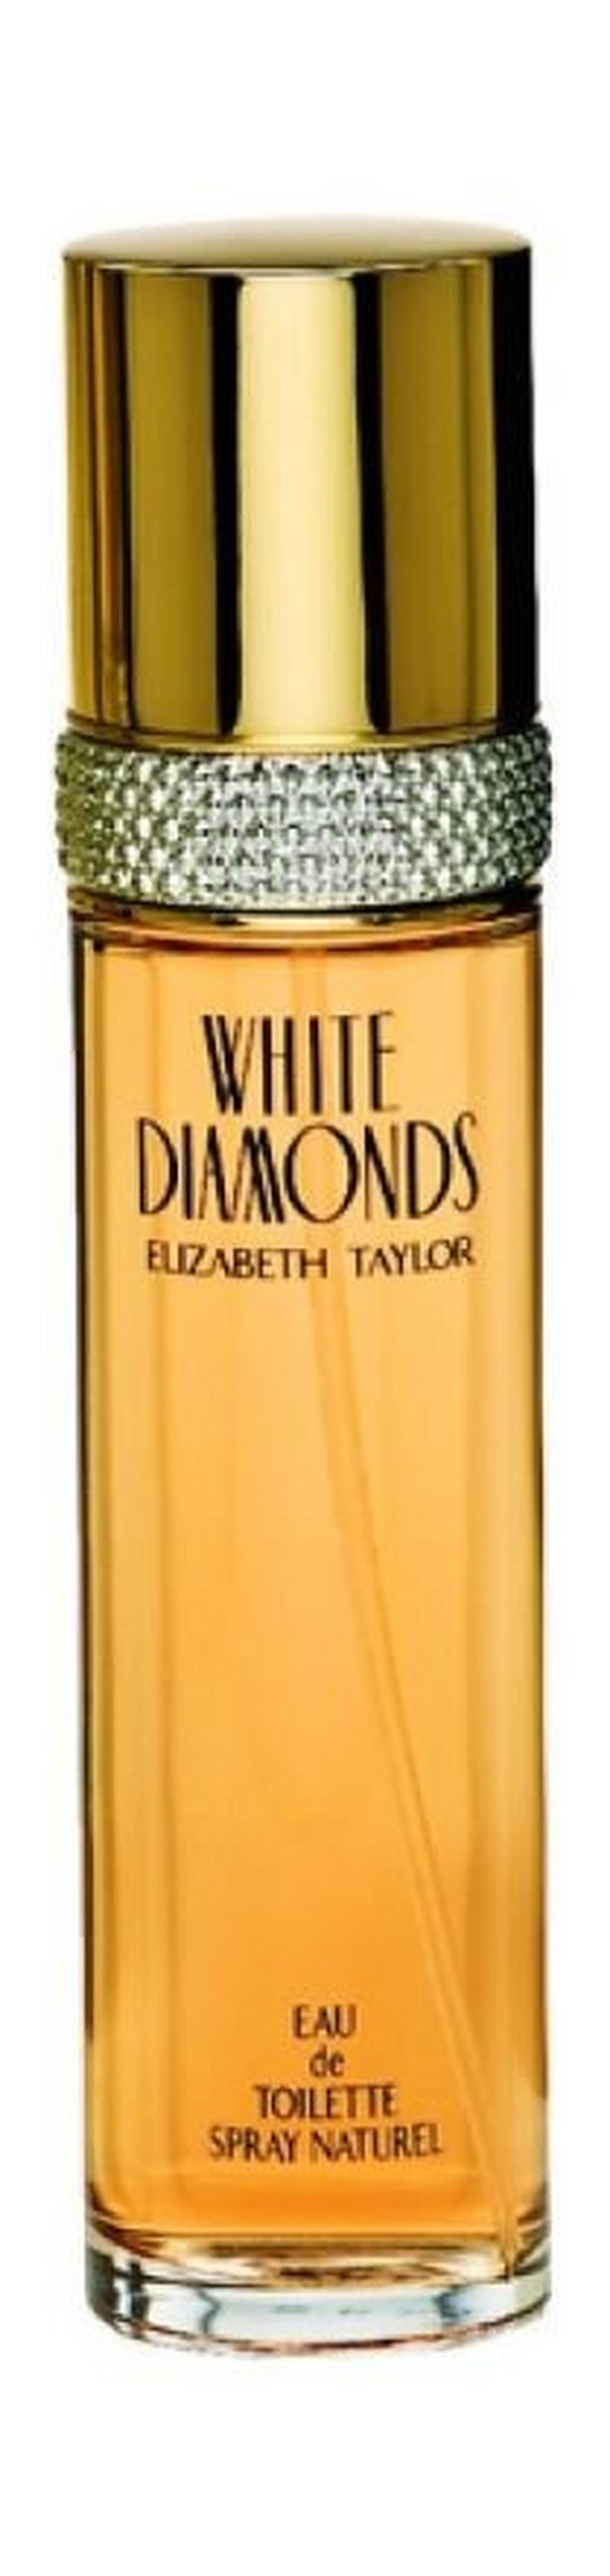 Elizabeth Taylor White Diamonds Eau de Toilette for Women 100ml